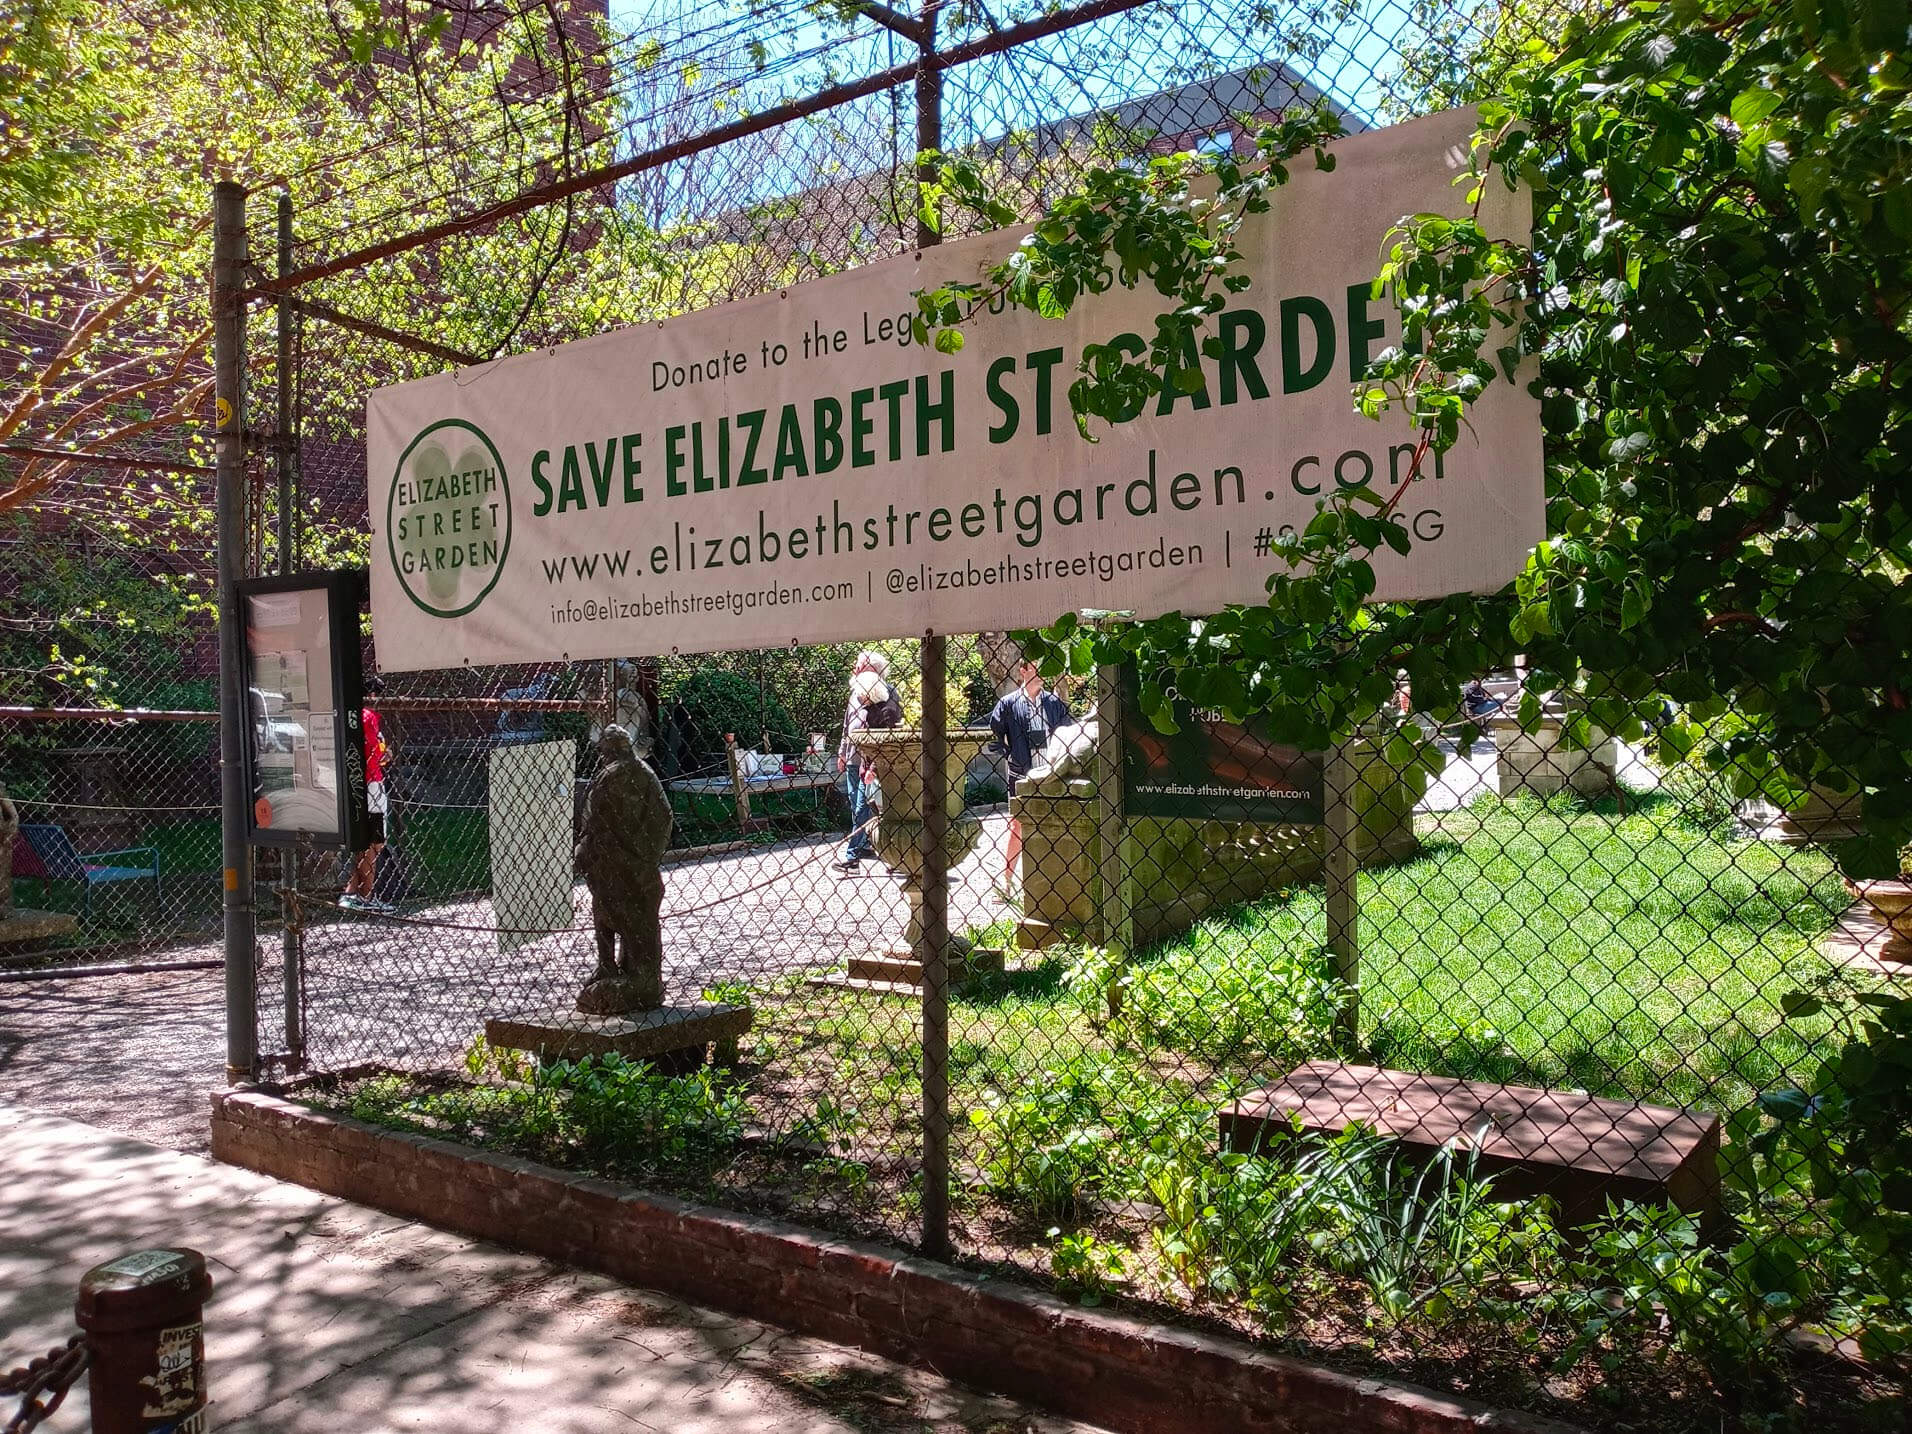 Elizabeth Street Garden, a local small business